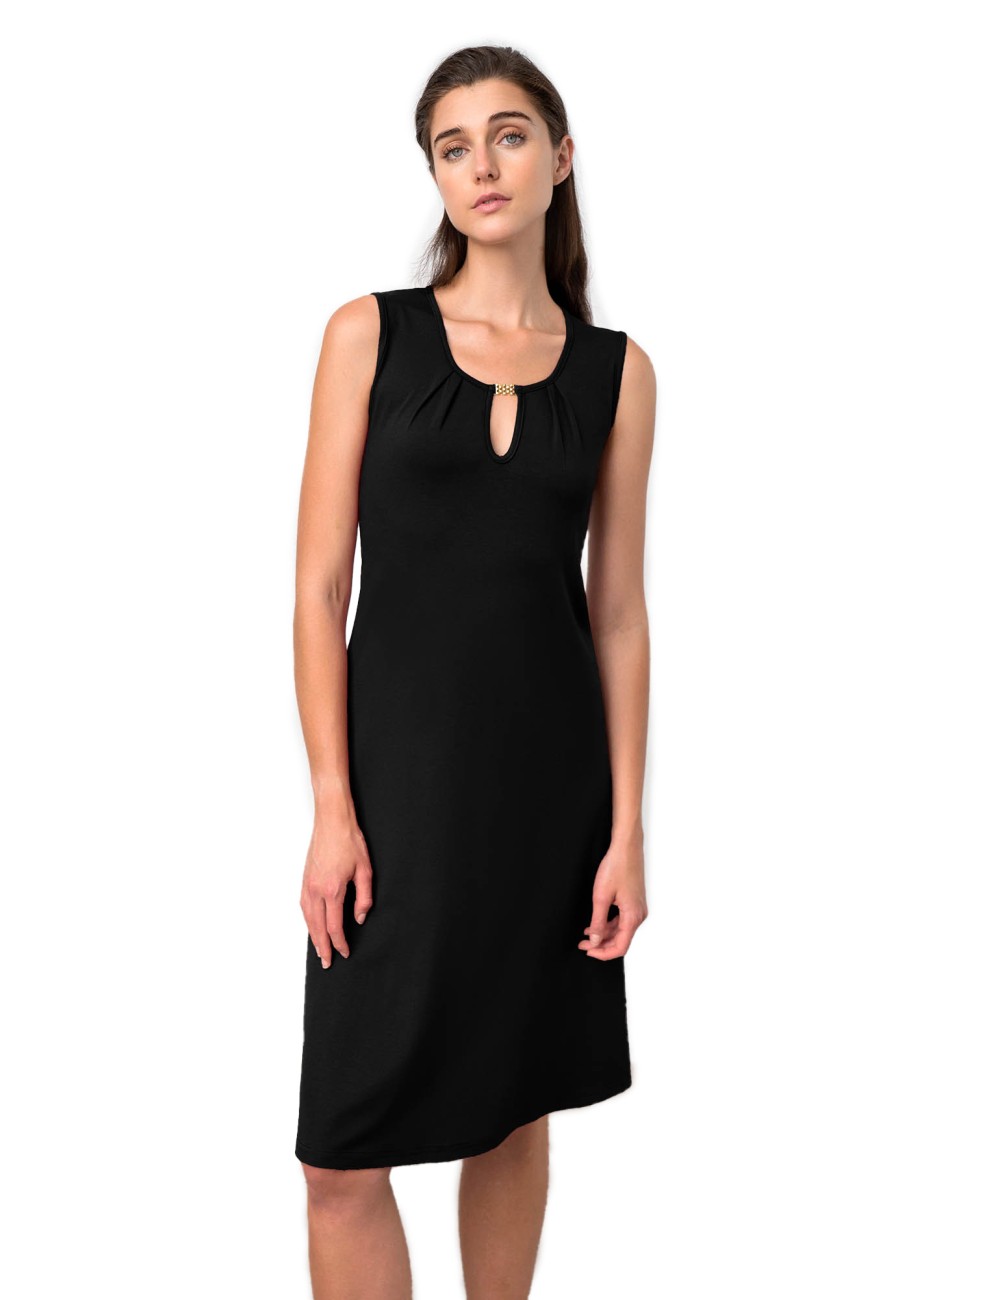 Vamp Κλασικό Αμάνικο Φόρεμα Μονόχρωμο Plus Size 18489 Lamoda.gr